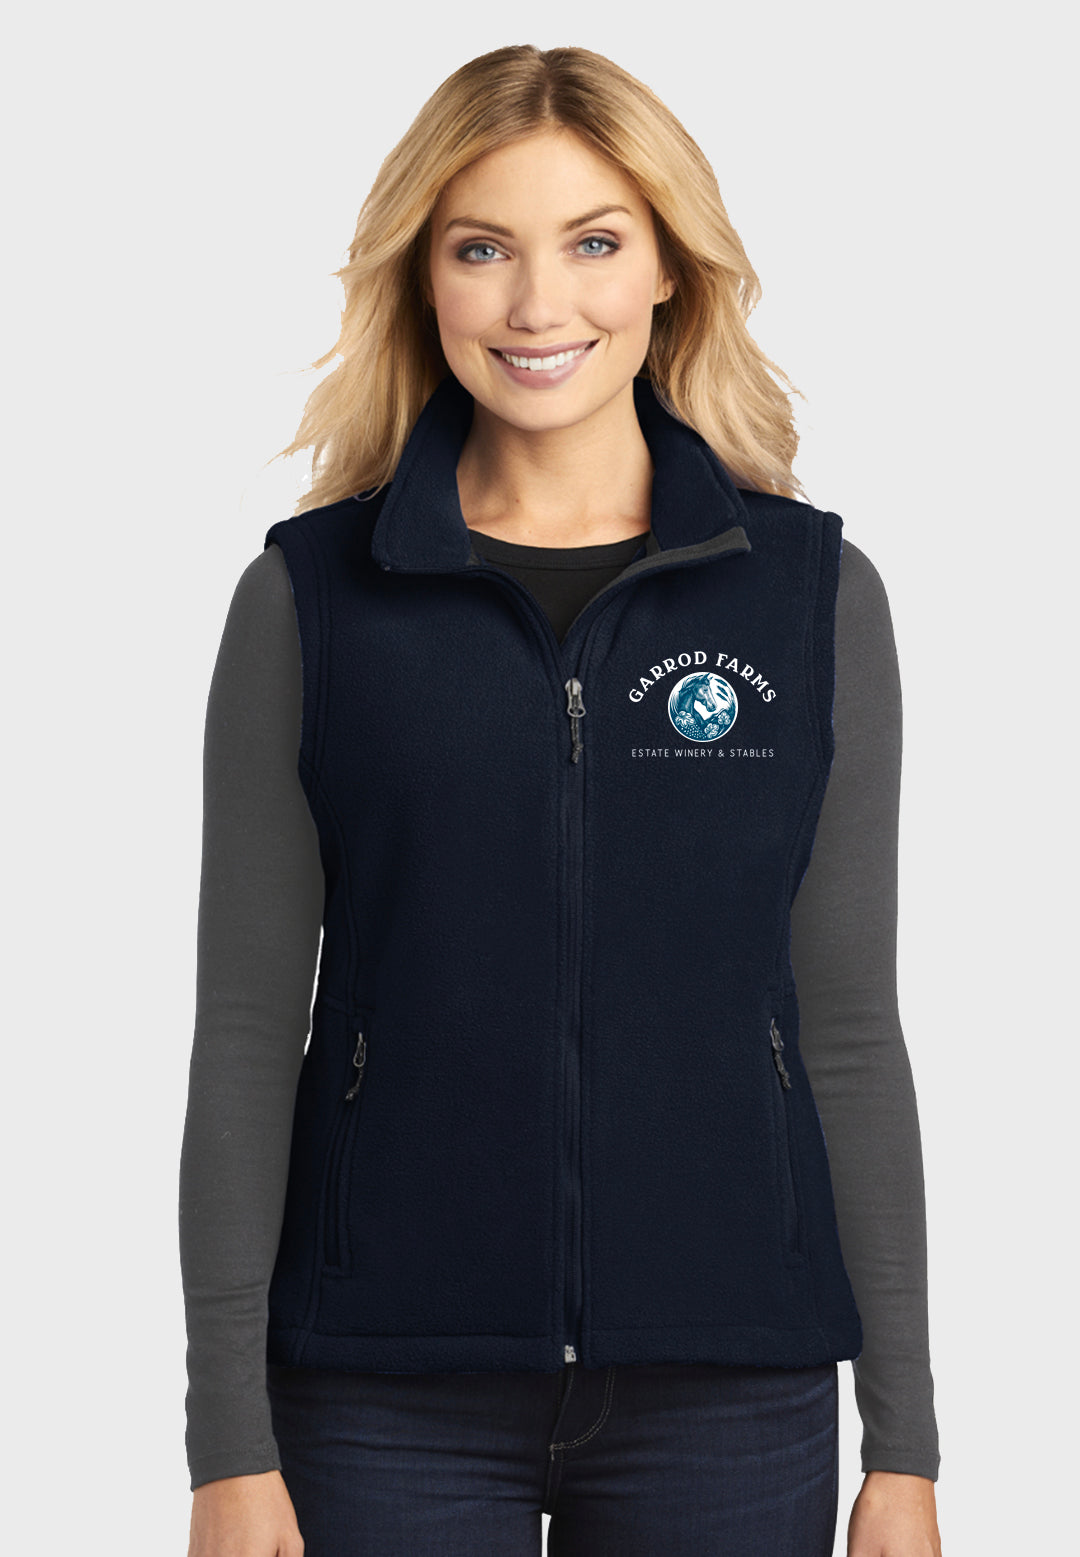 Garrod Farms Port Authority® Ladies Value Fleece Vest